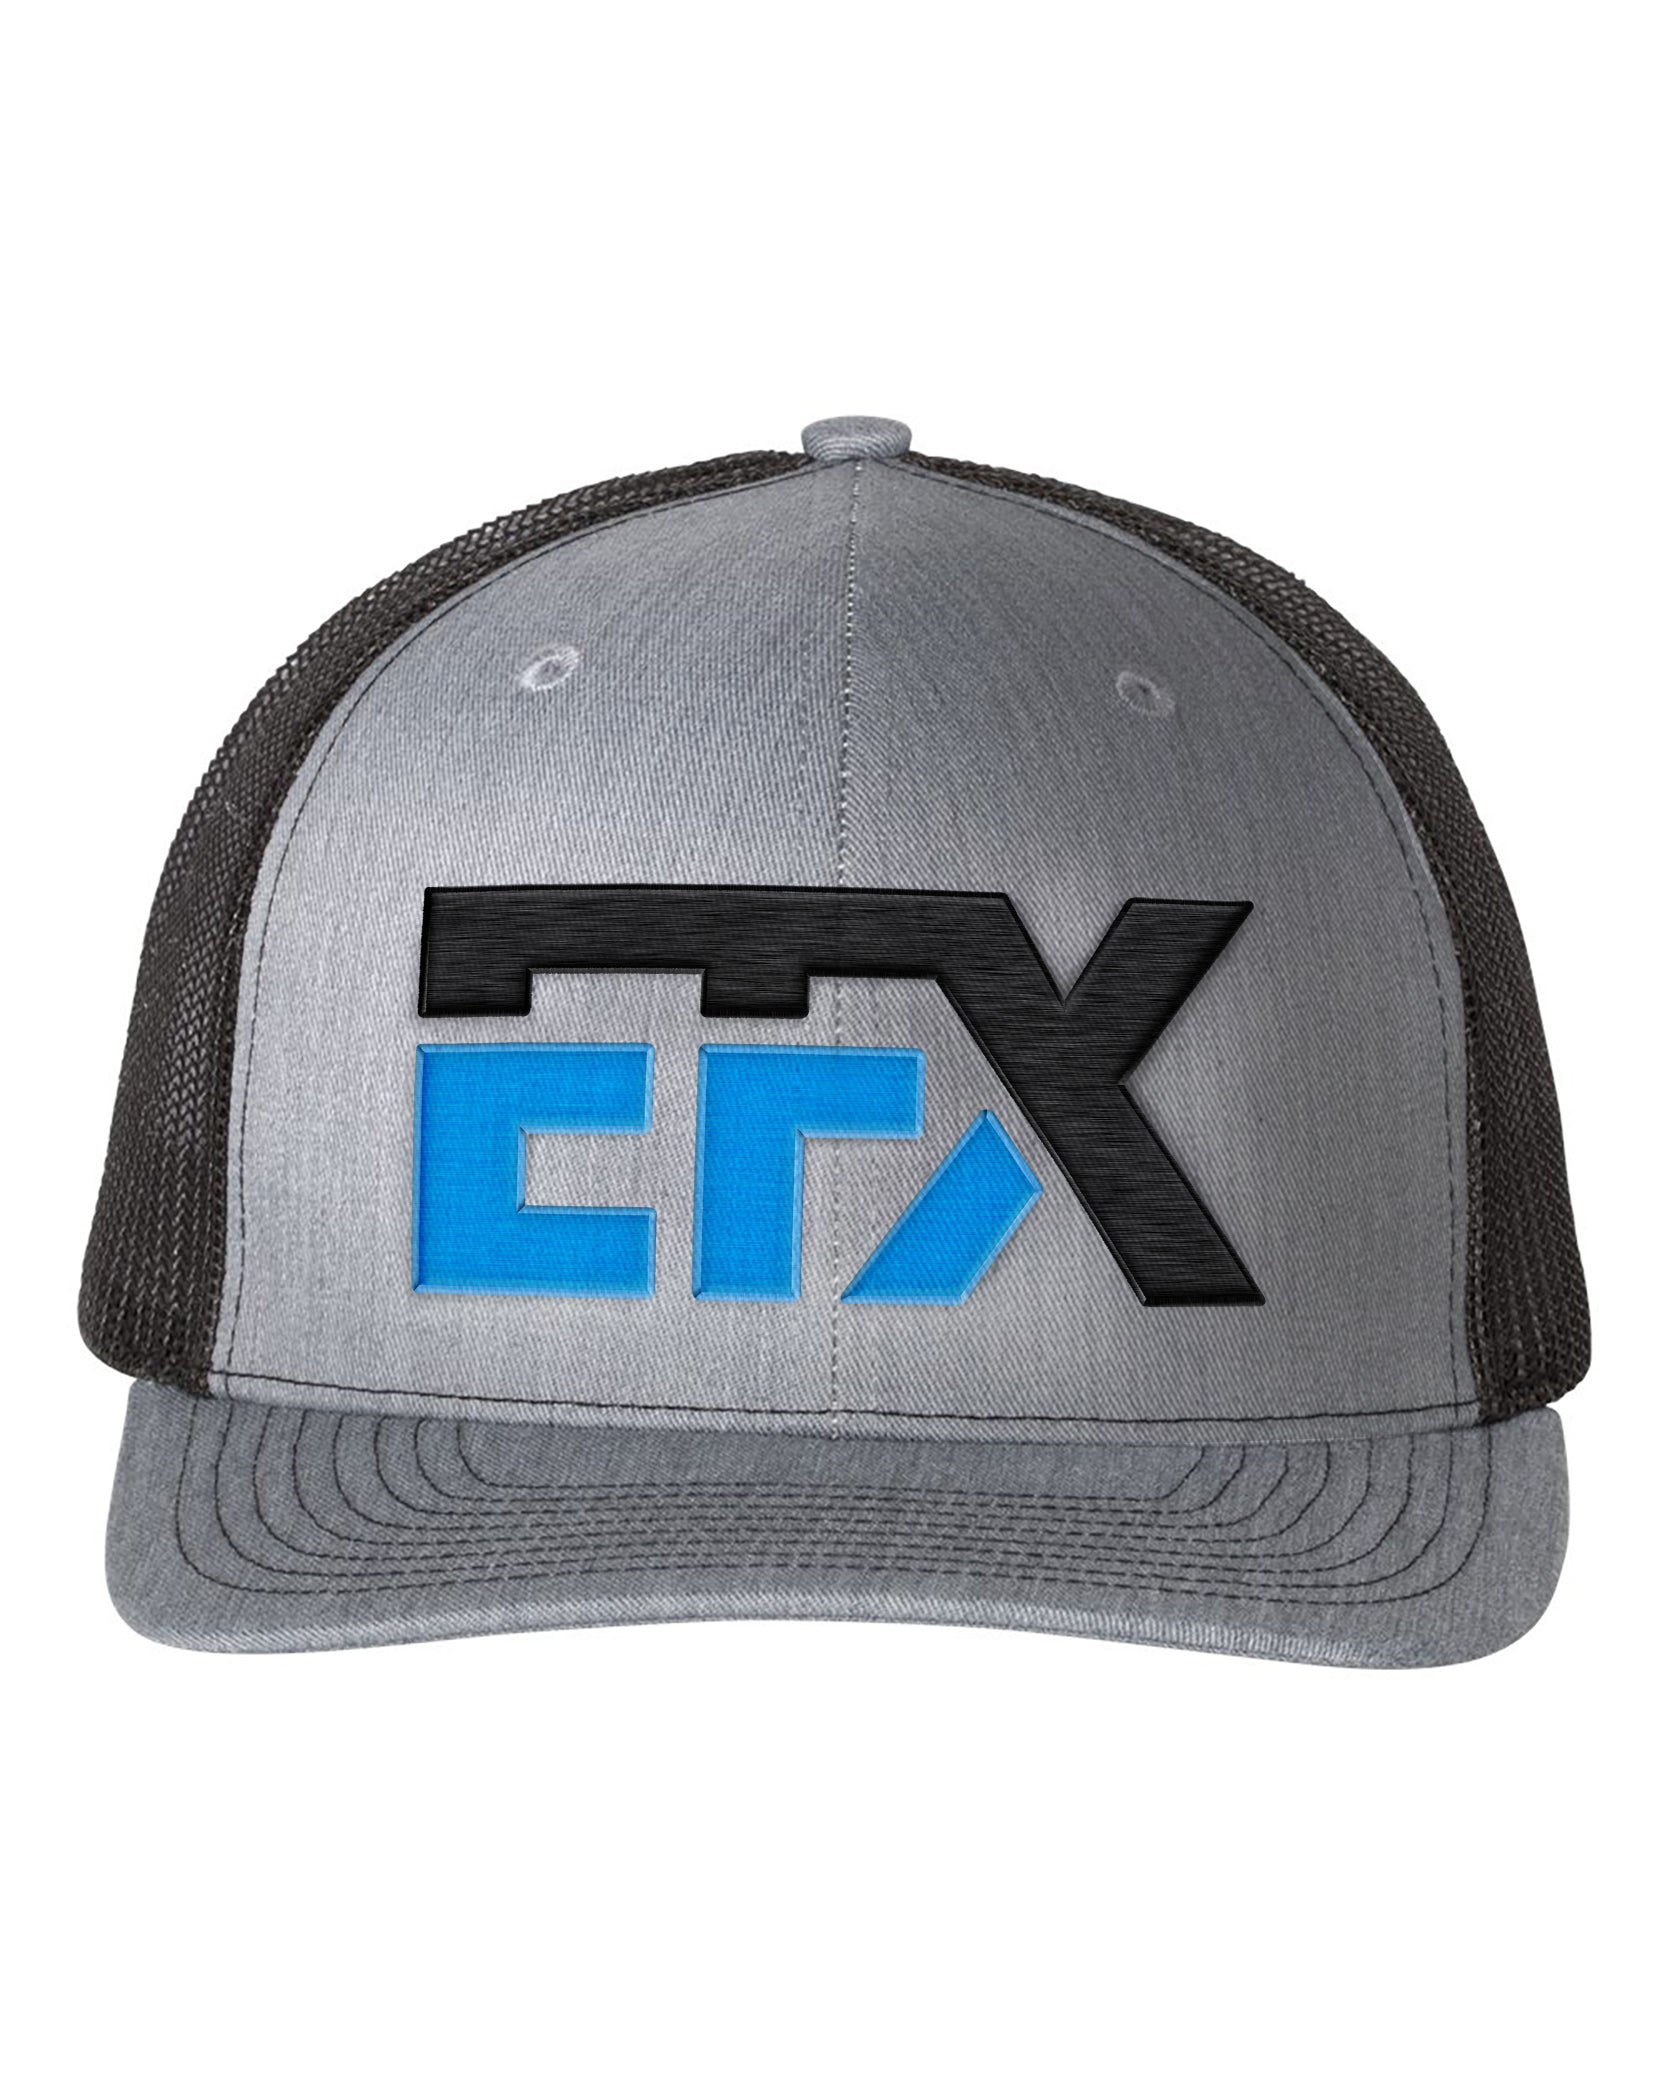 Logo-Short-Black & Blue on Black & Gray Hat